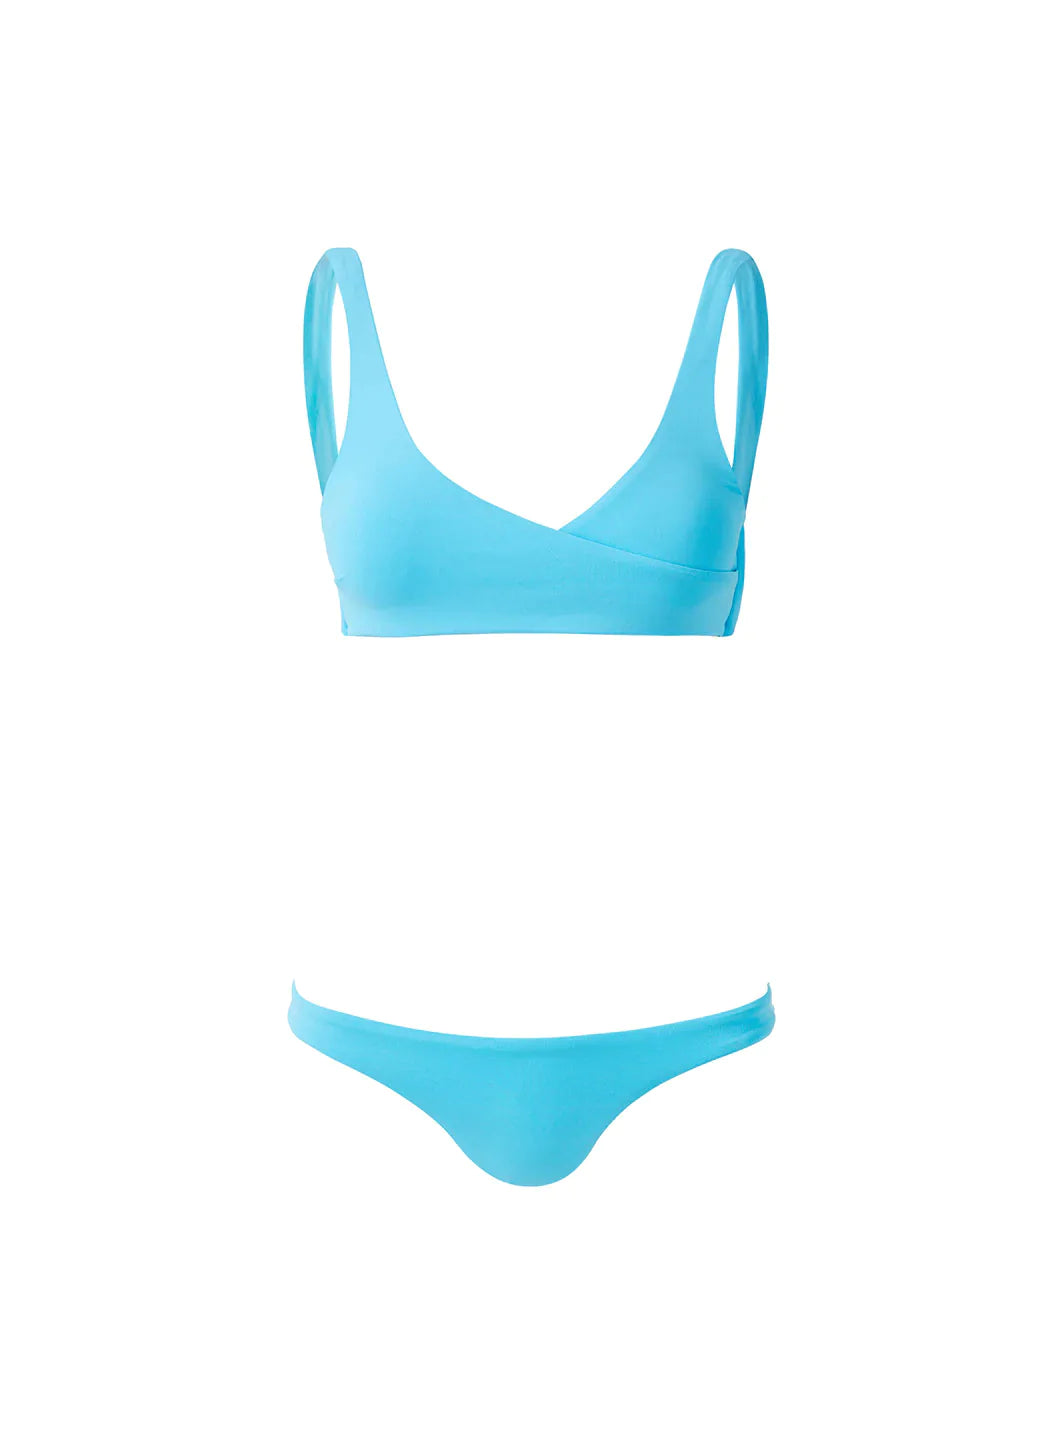 The Best D&B Swimsuits & Bikinis for Sunbathing - Deakin and Blue